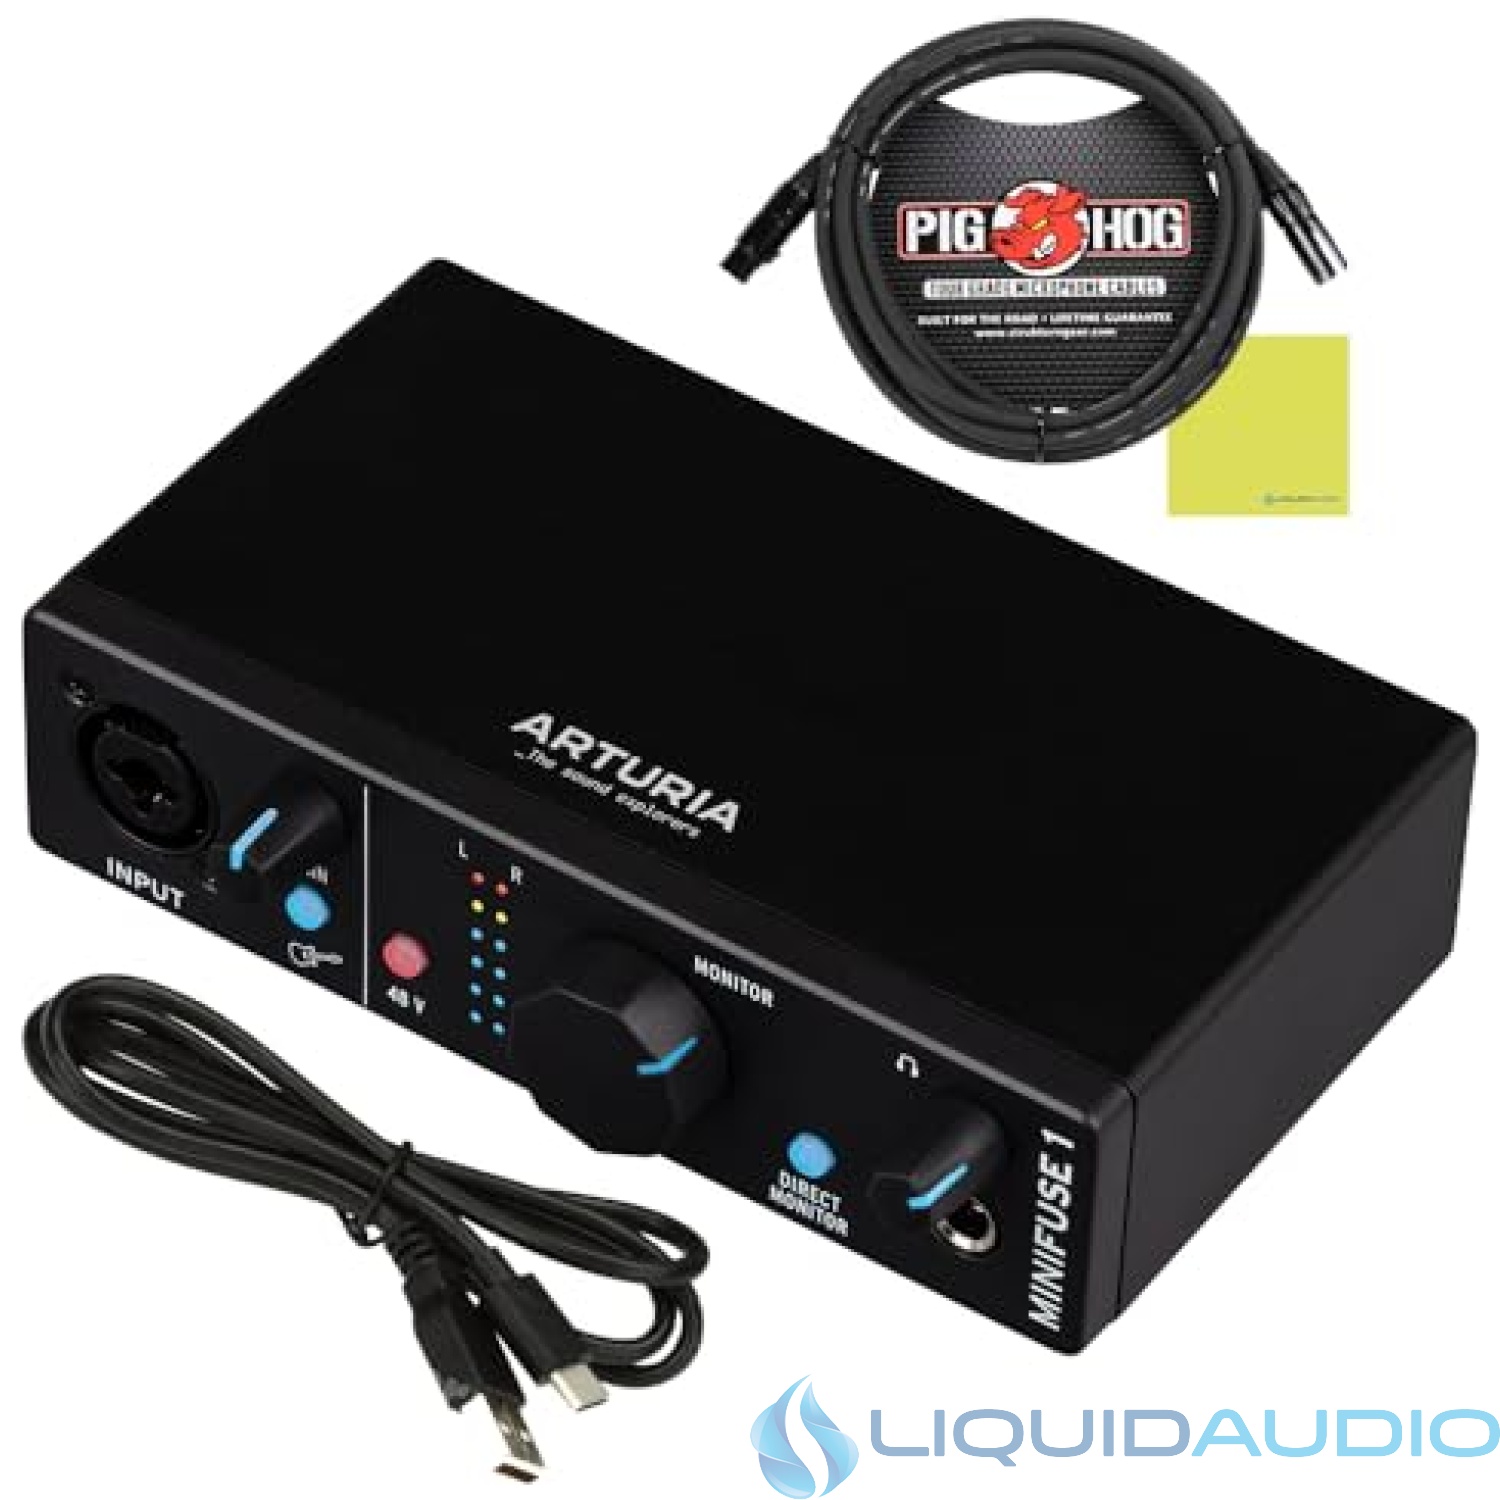 Arturia MiniFuse 1 Portable USB-C Audio Interface, Black w/Pig Hog PHM10 8mm XLR Microphone Cable and Liquid Audio Polishing Cloth